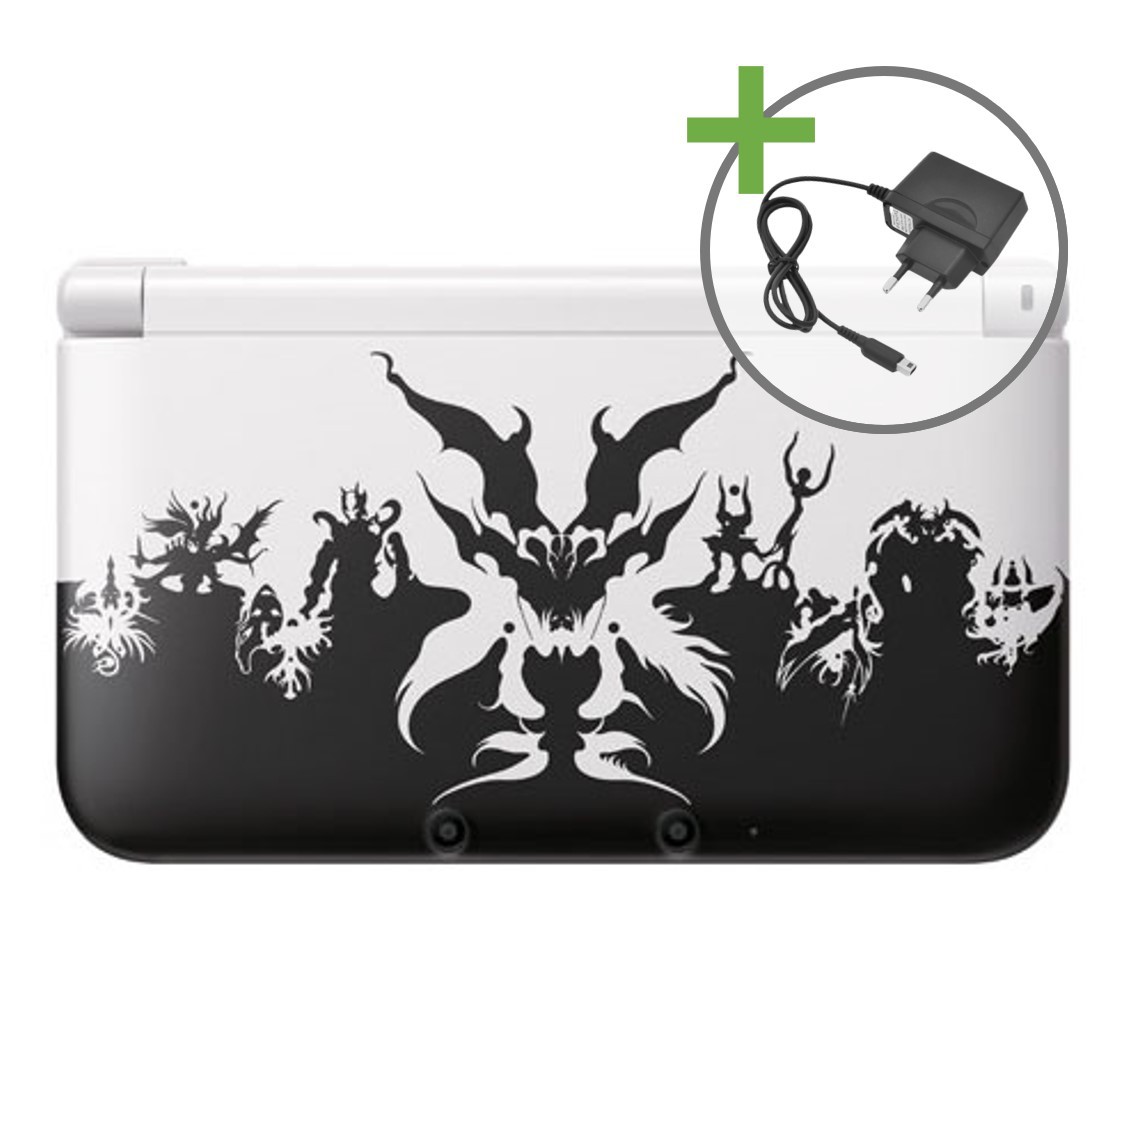 Nintendo 3DS XL - Shin Megami Tensei IV Edition - Nintendo 3DS Hardware - 3